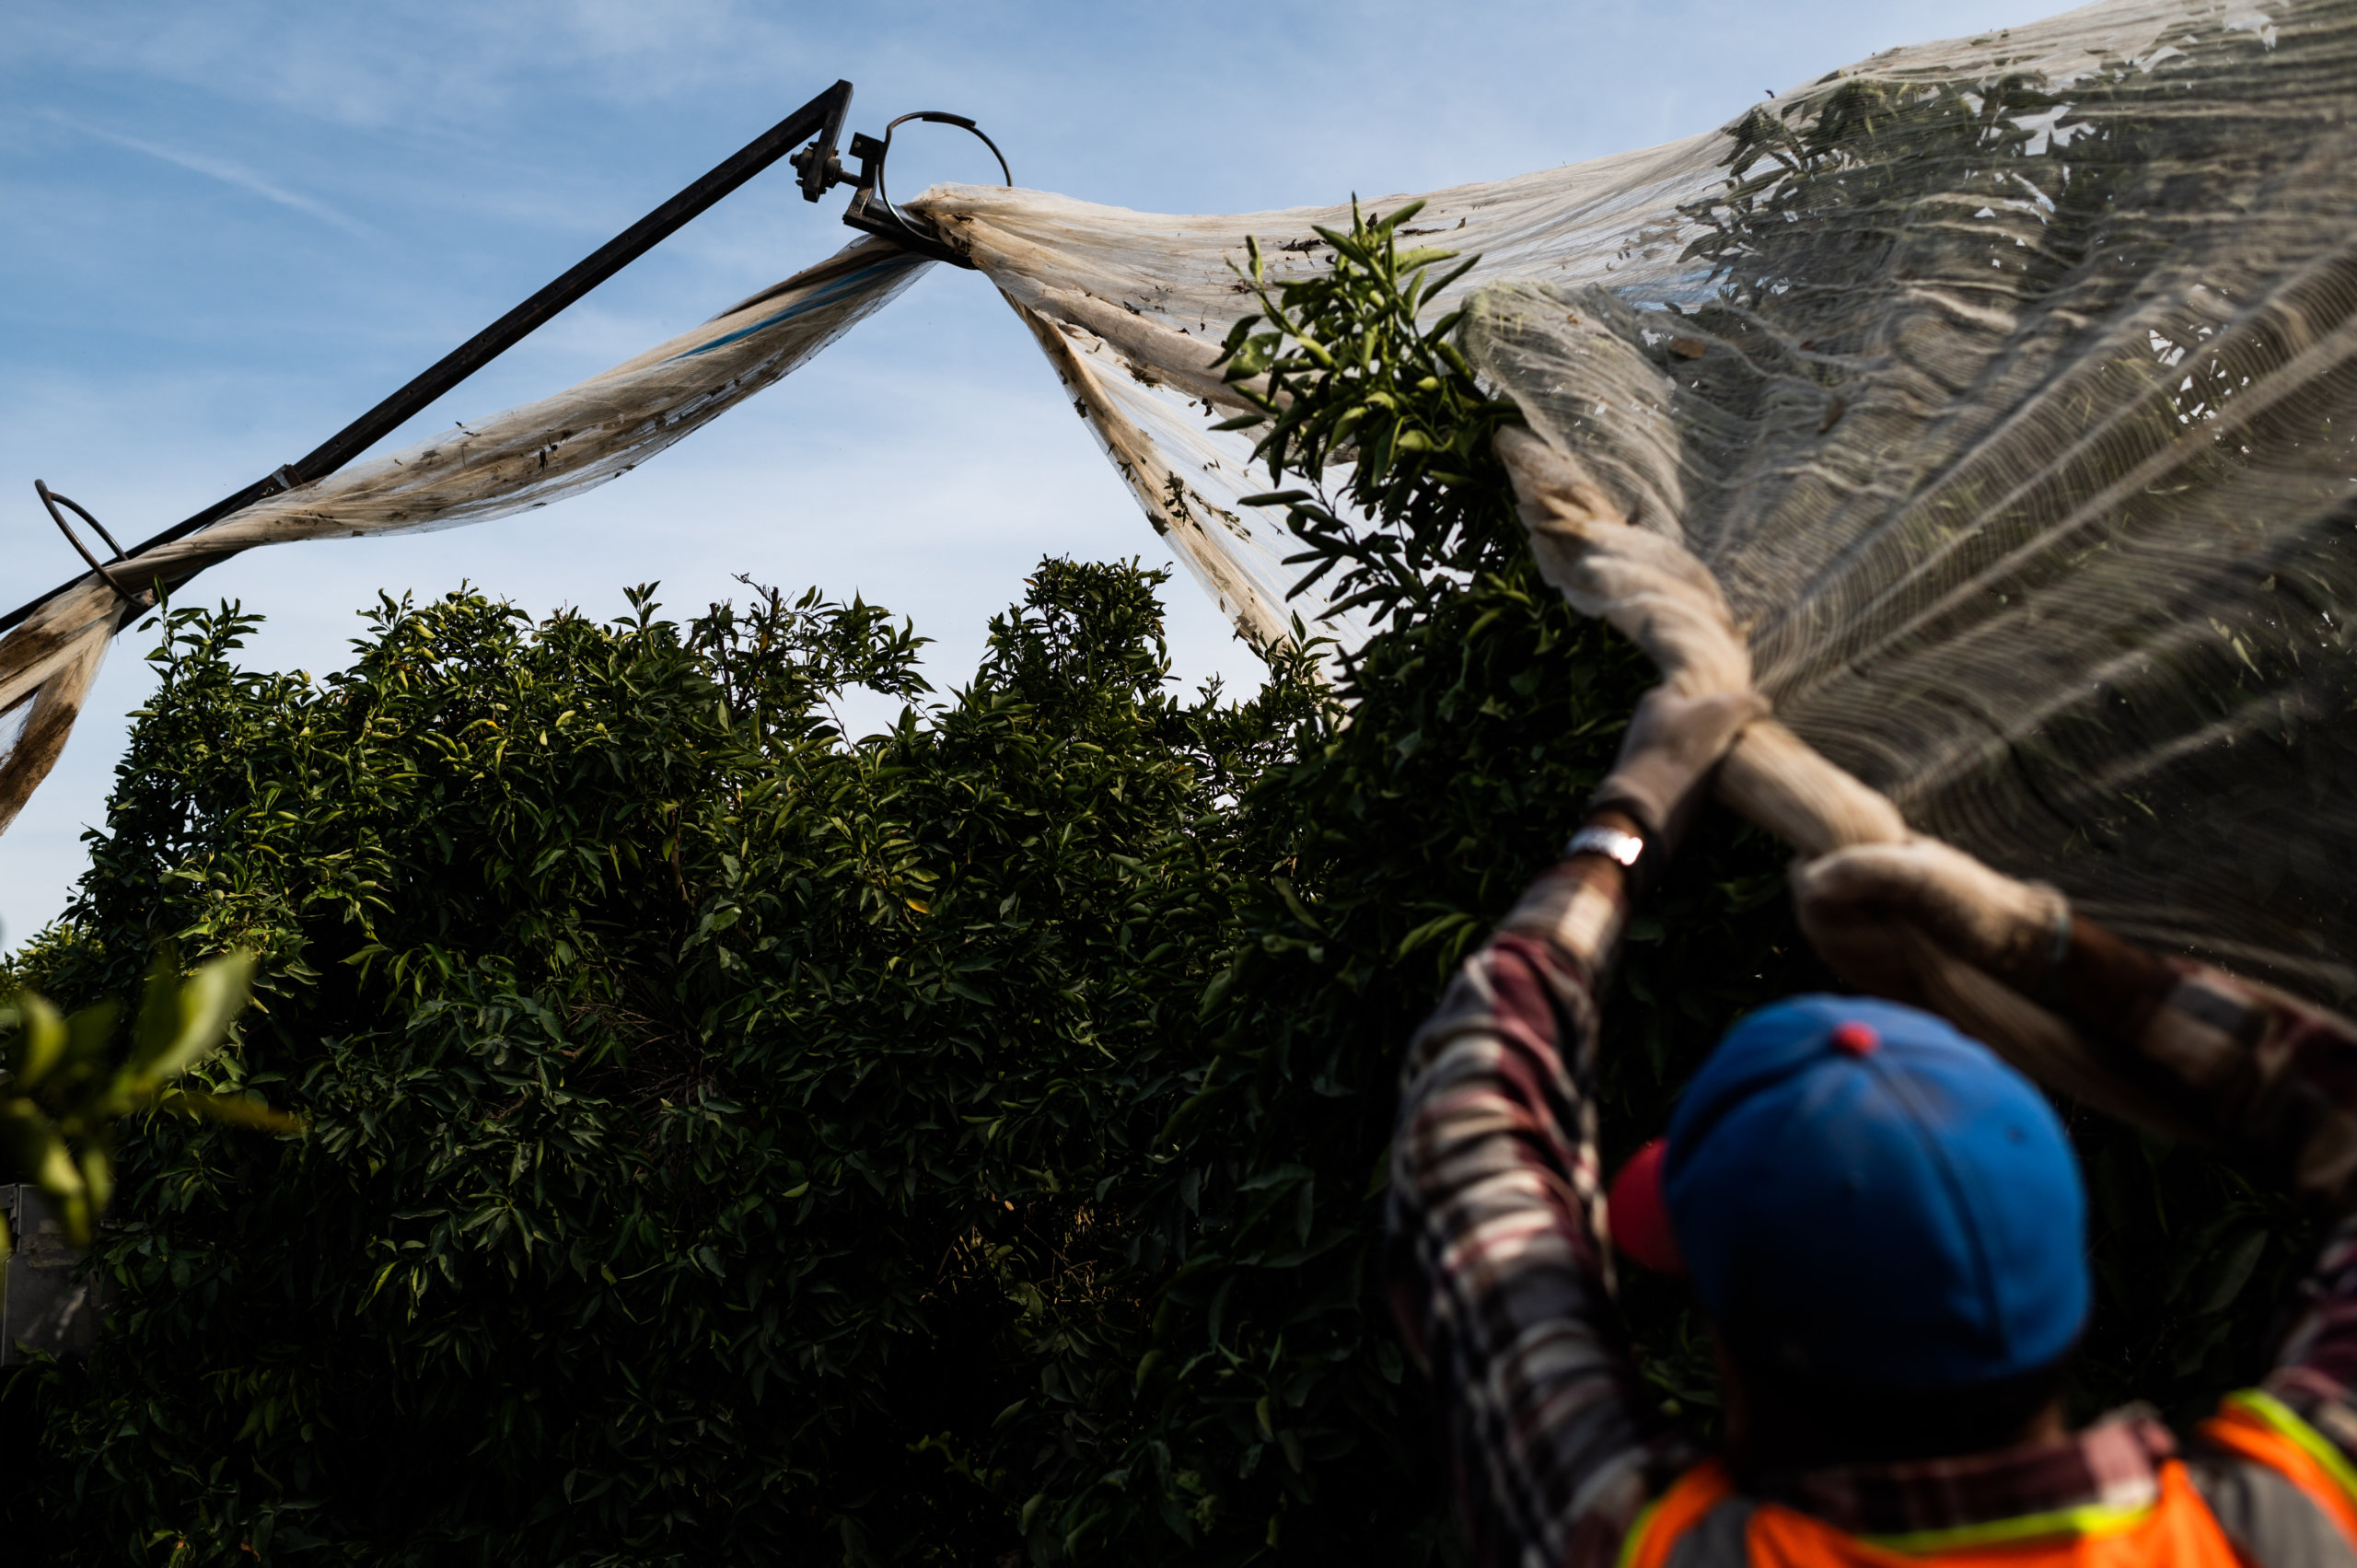 A farm worker helps guid the net around limbs